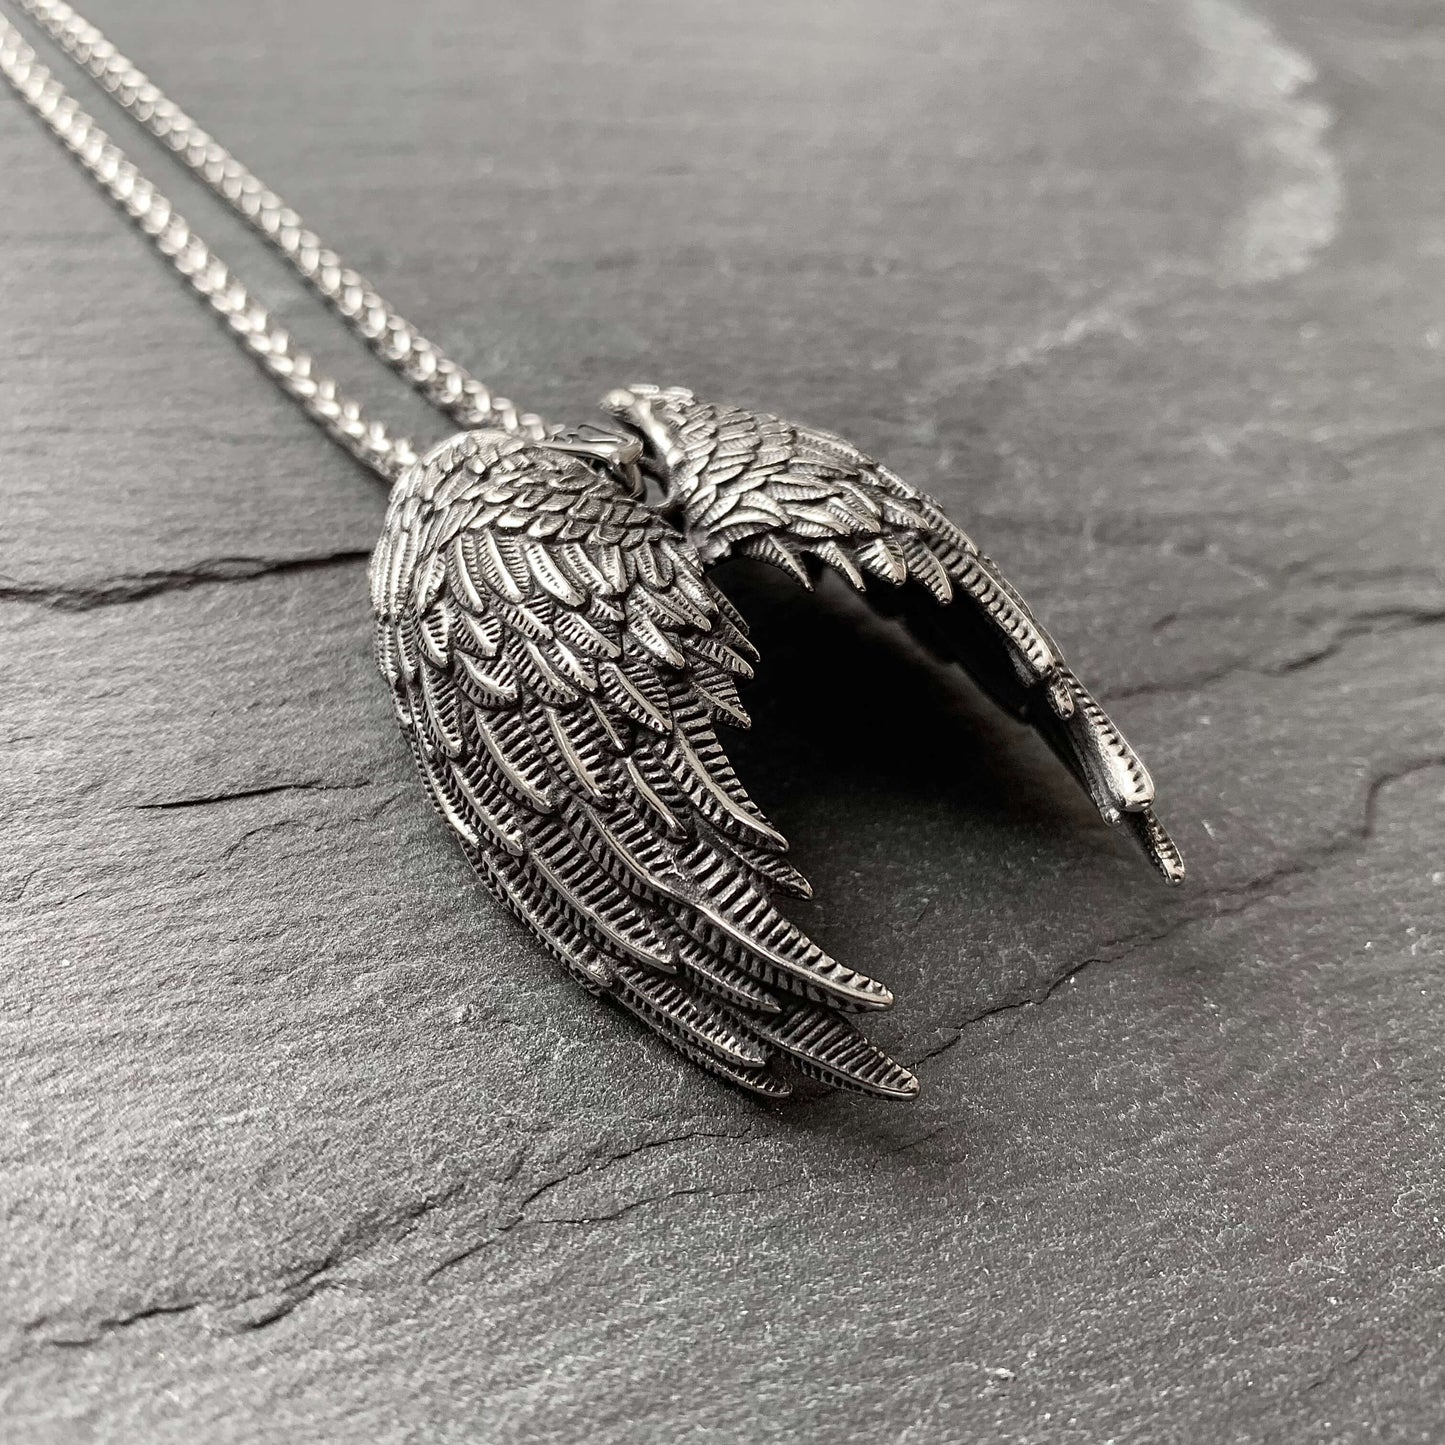 Fallen Angel Necklace